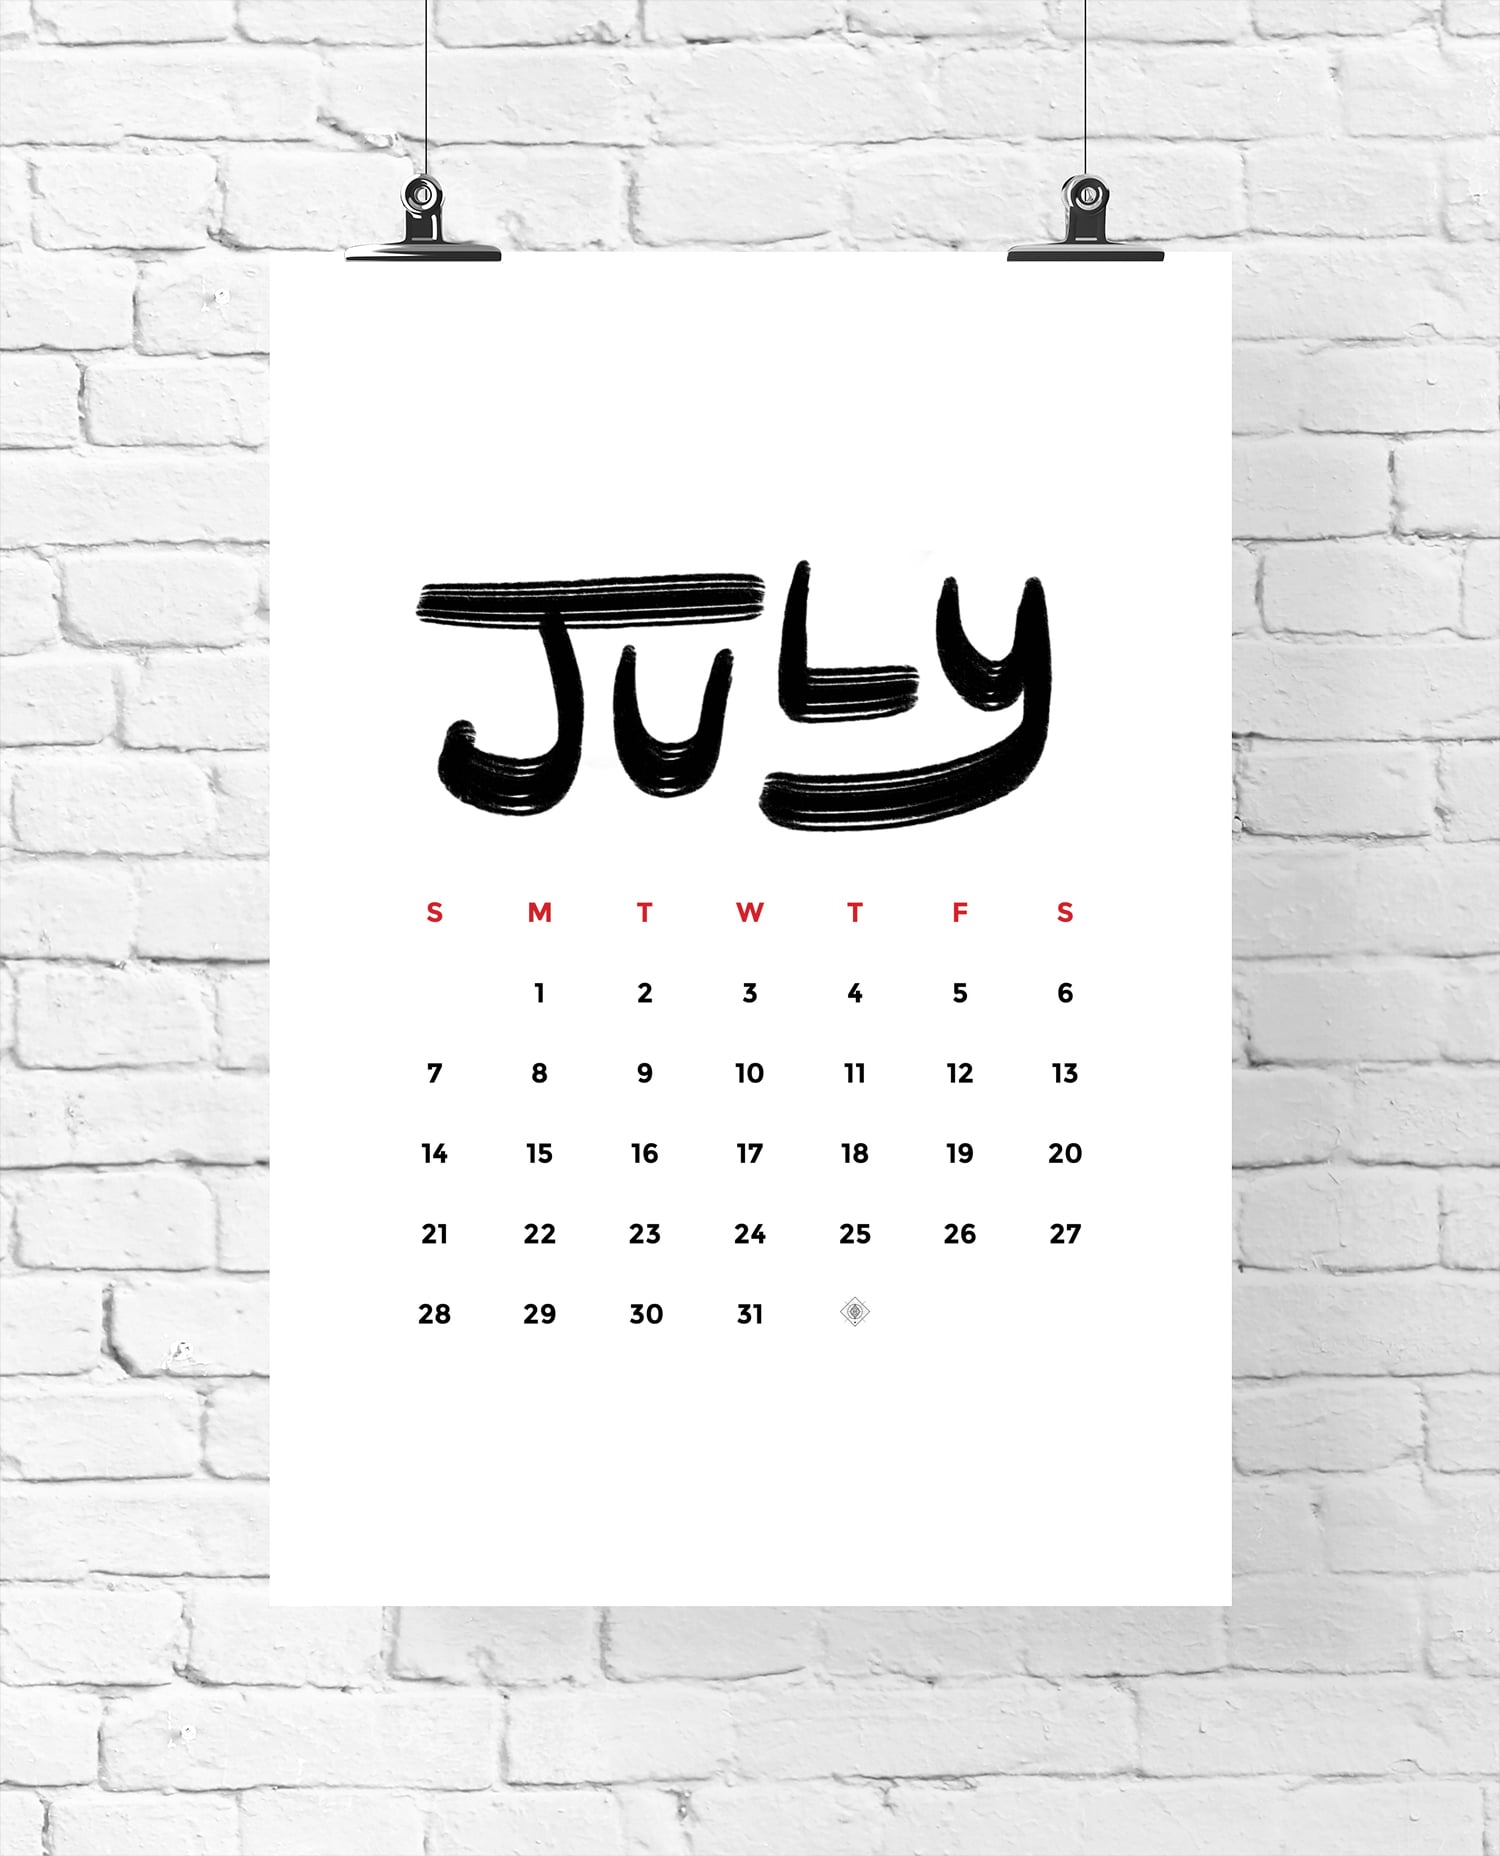 Free Printable 2019 Calendar • Little Gold Pixel